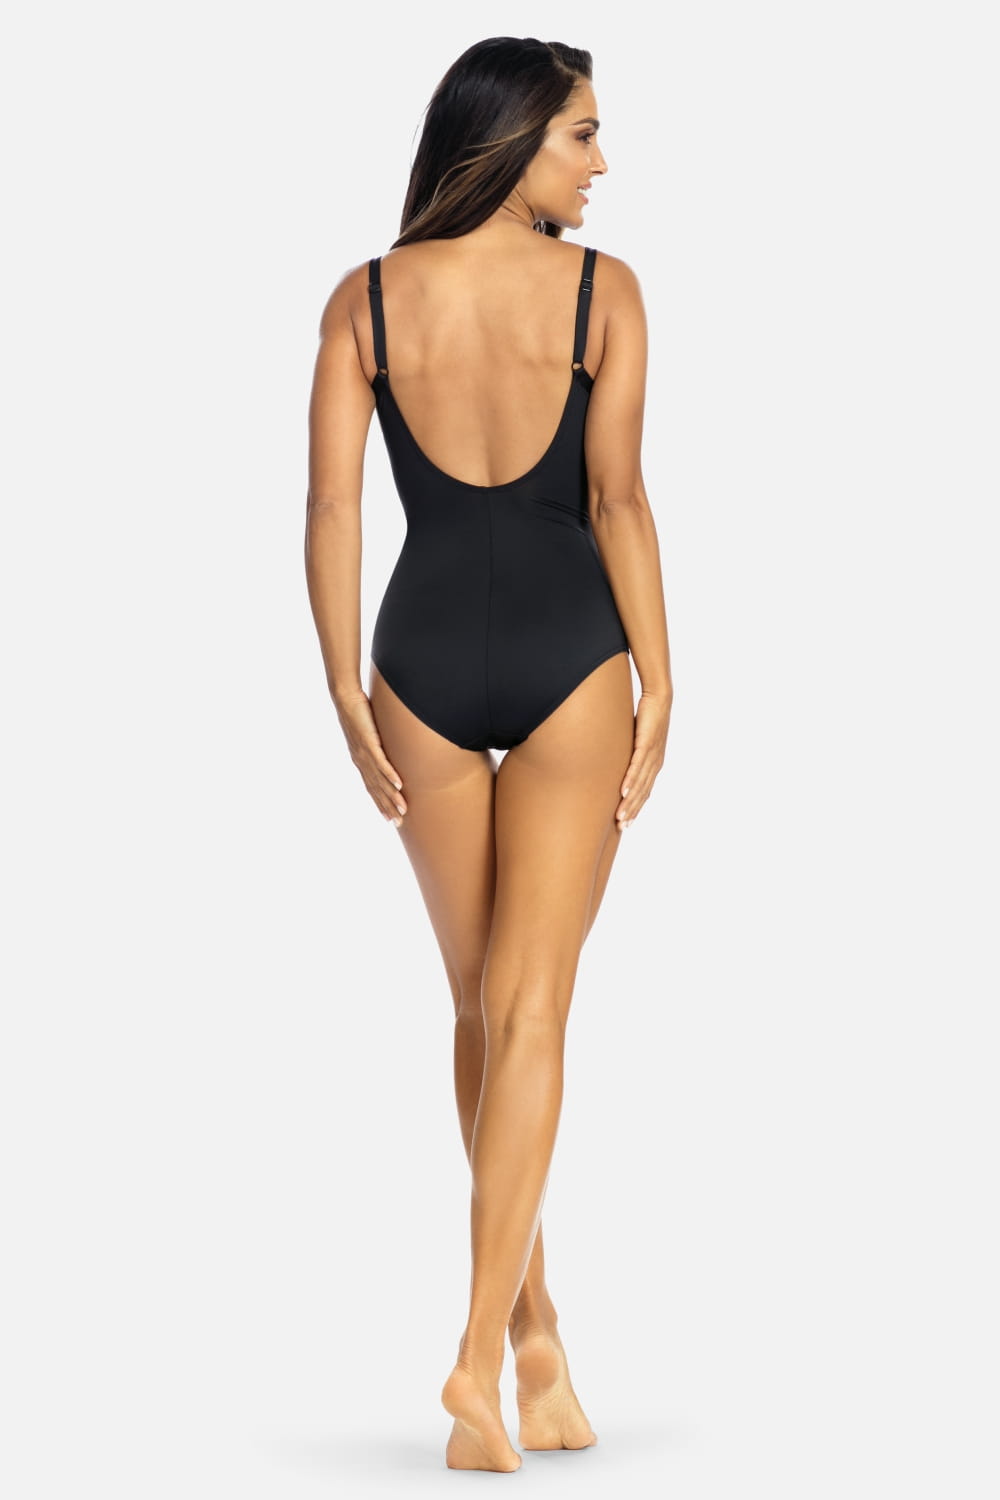 Axami Luxury Swimwear F30 Slimming One Piece Swimsuit Black/Silver